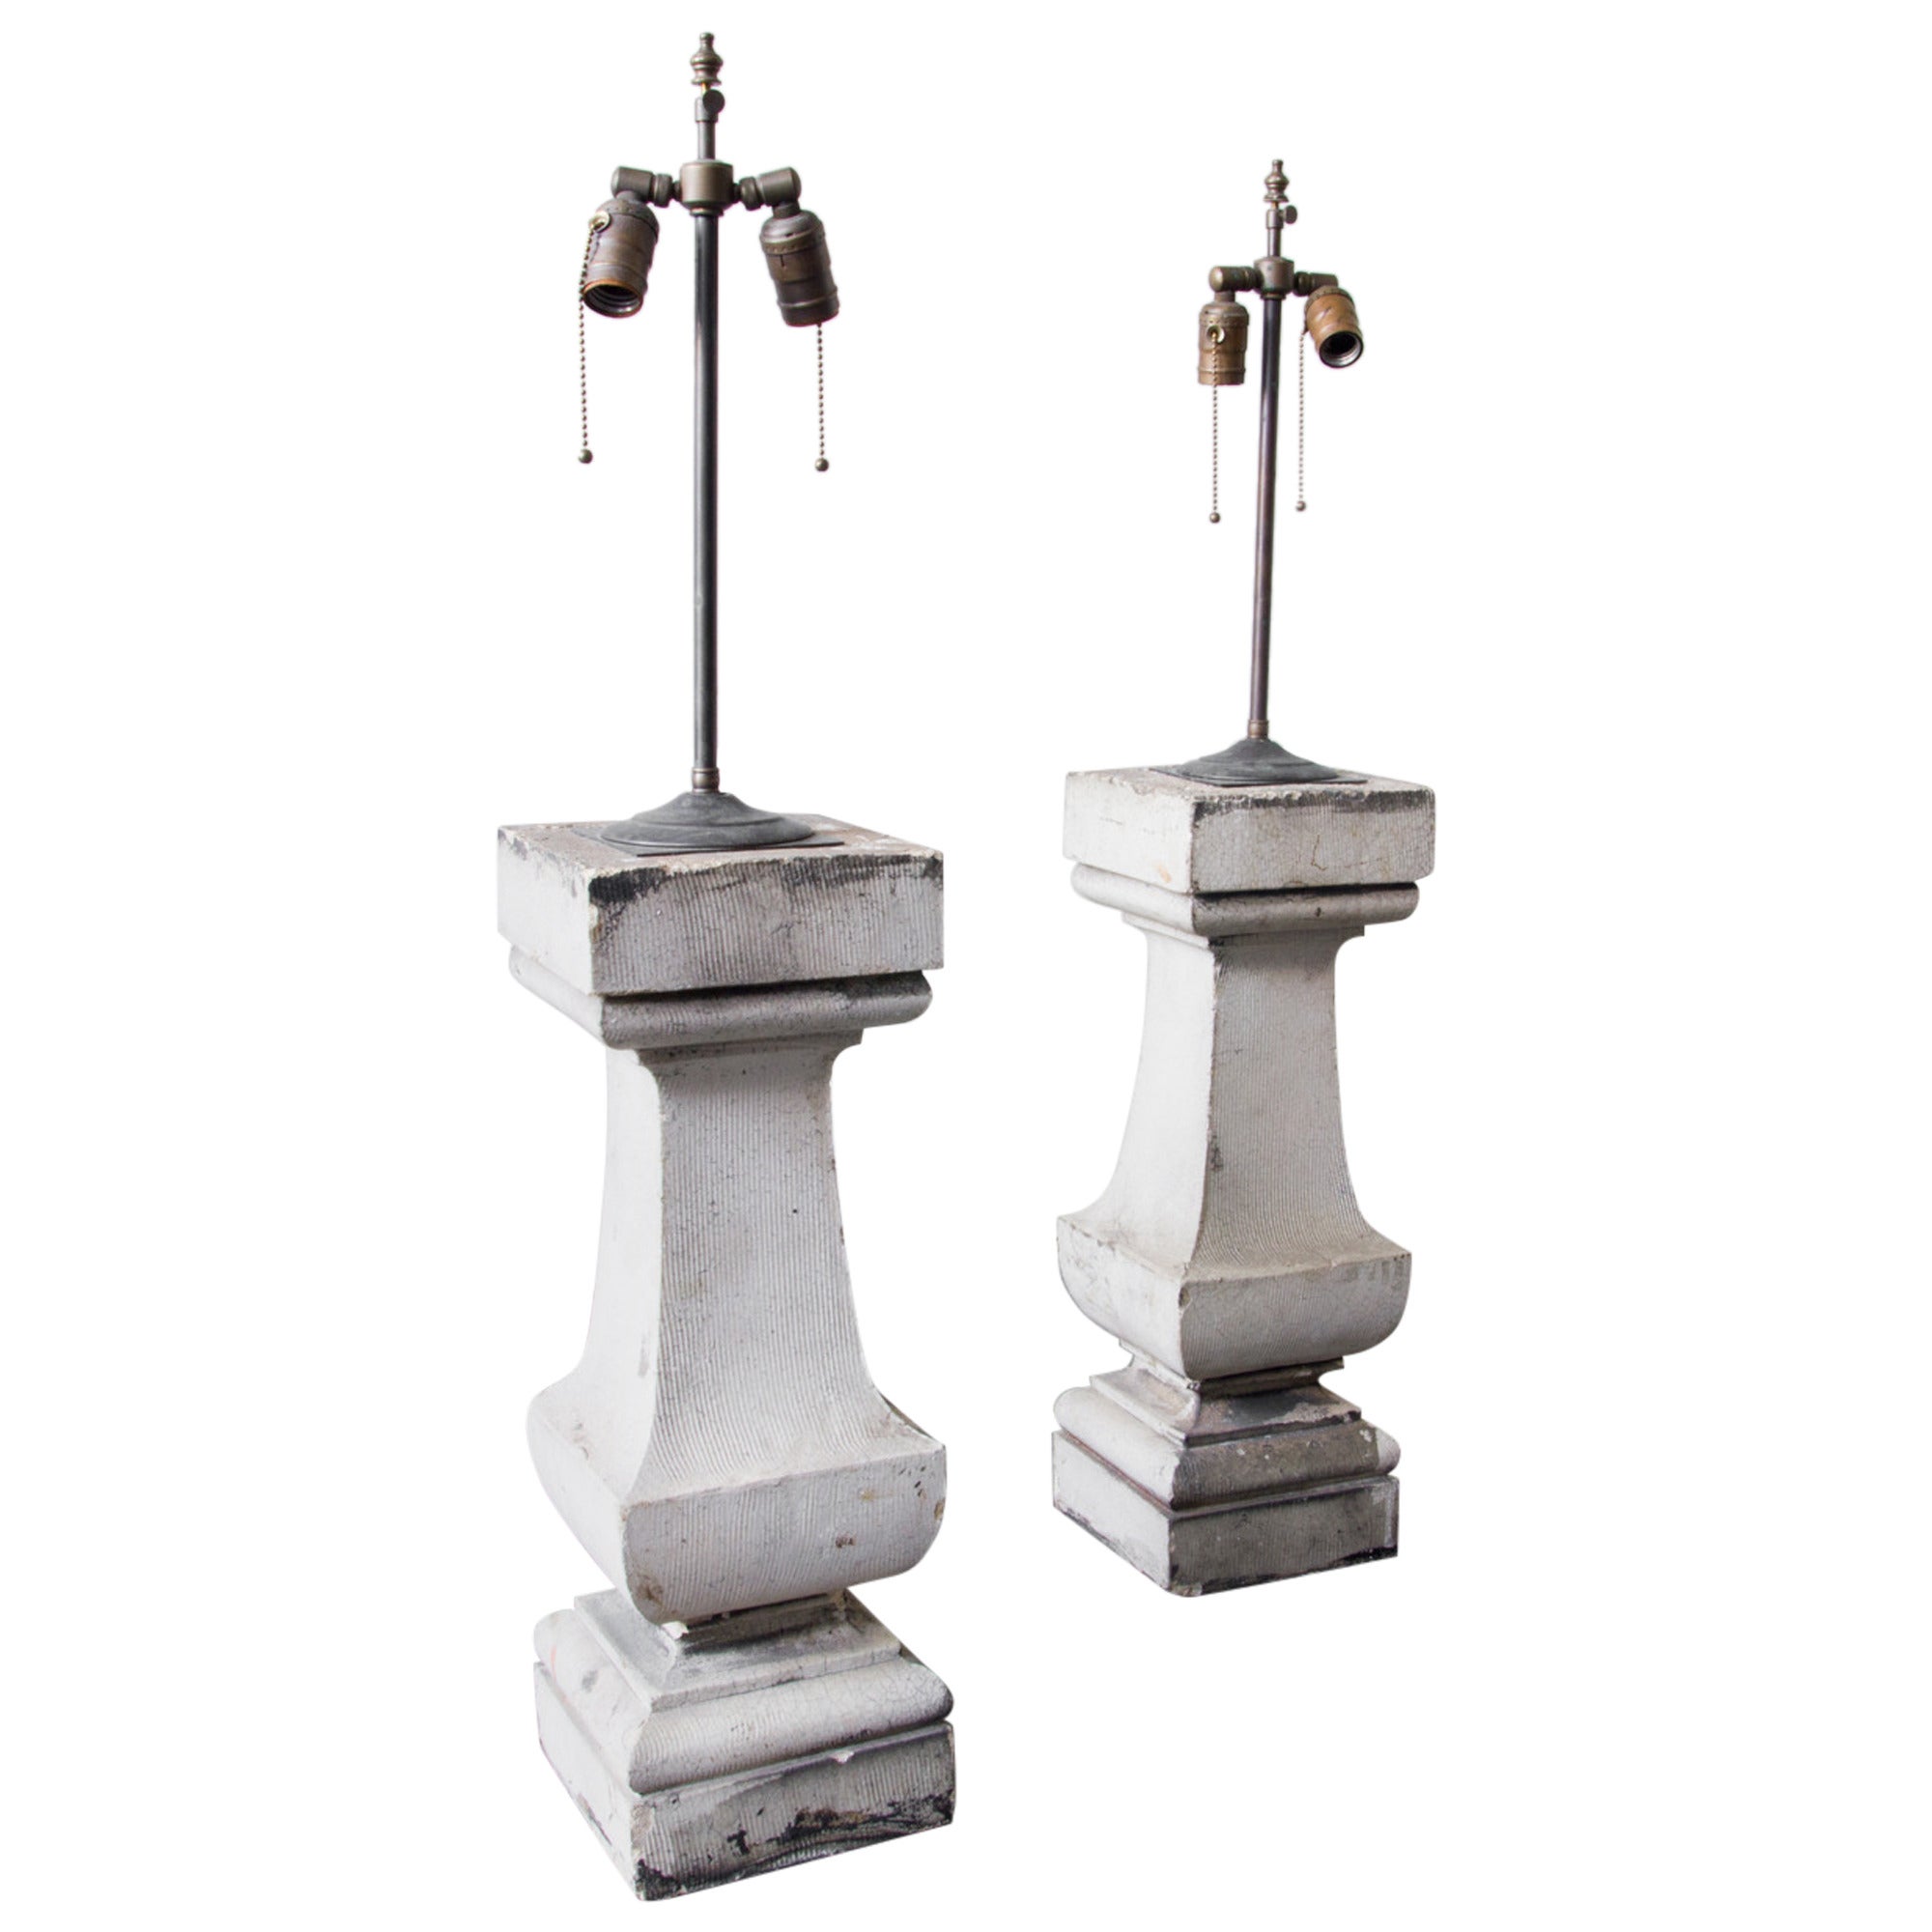 Architectural Pedestal Lamps For Sale